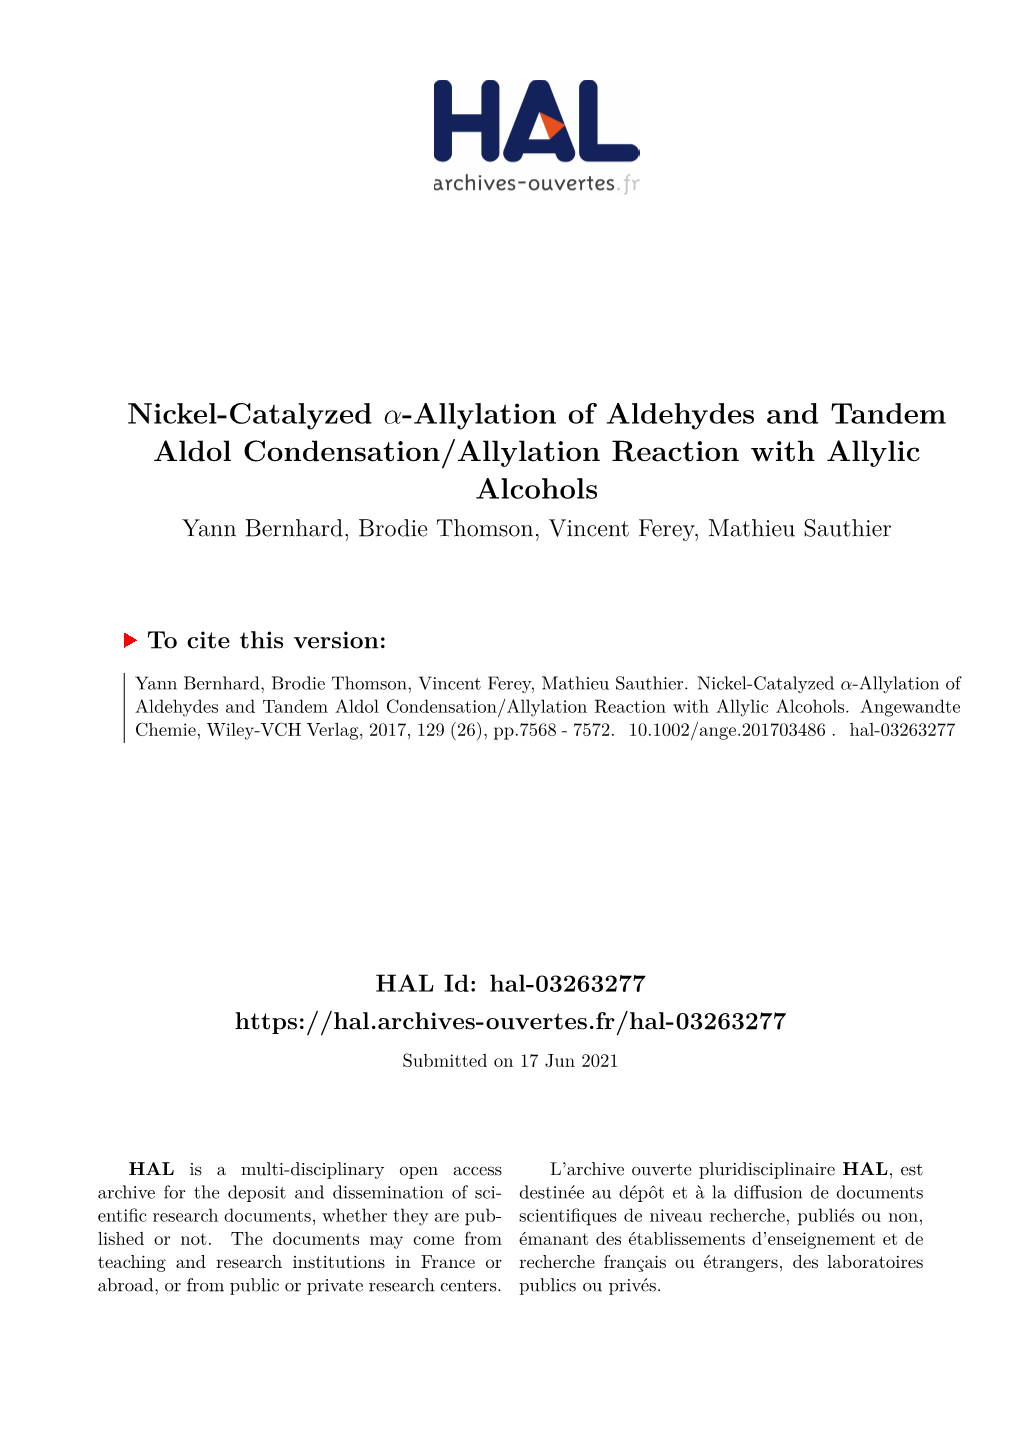 Allylation of Aldehydes and Tandem Aldol Condensation/Allylation Reaction with Allylic Alcohols Yann Bernhard, Brodie Thomson, Vincent Ferey, Mathieu Sauthier